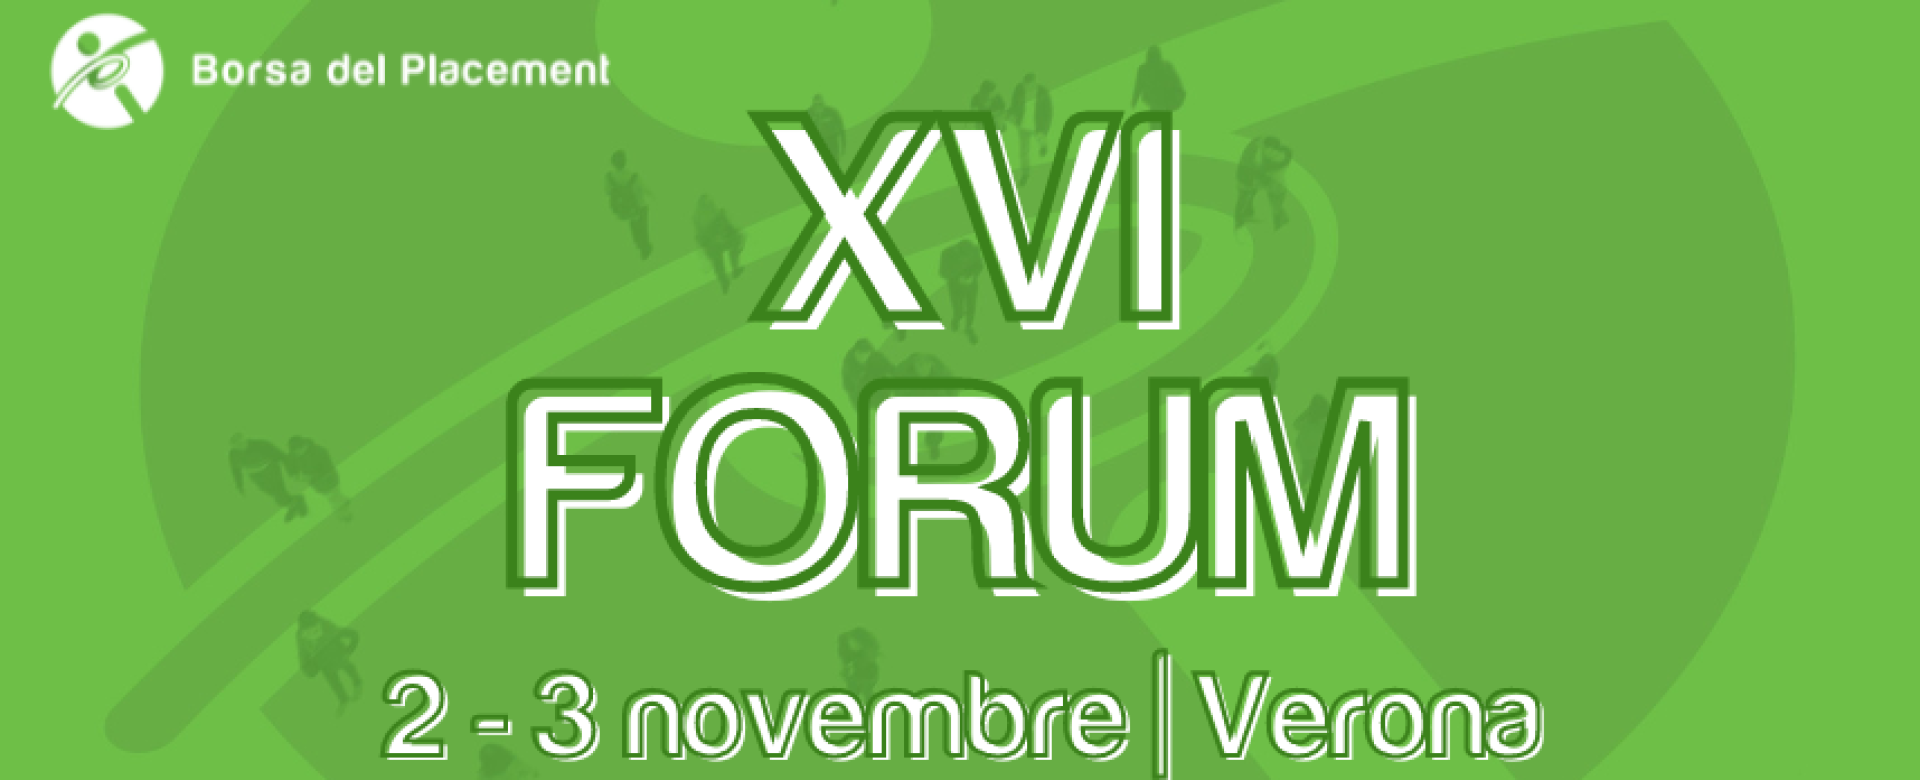 08.11.2021 - Borsa del Placement | XVI Forum